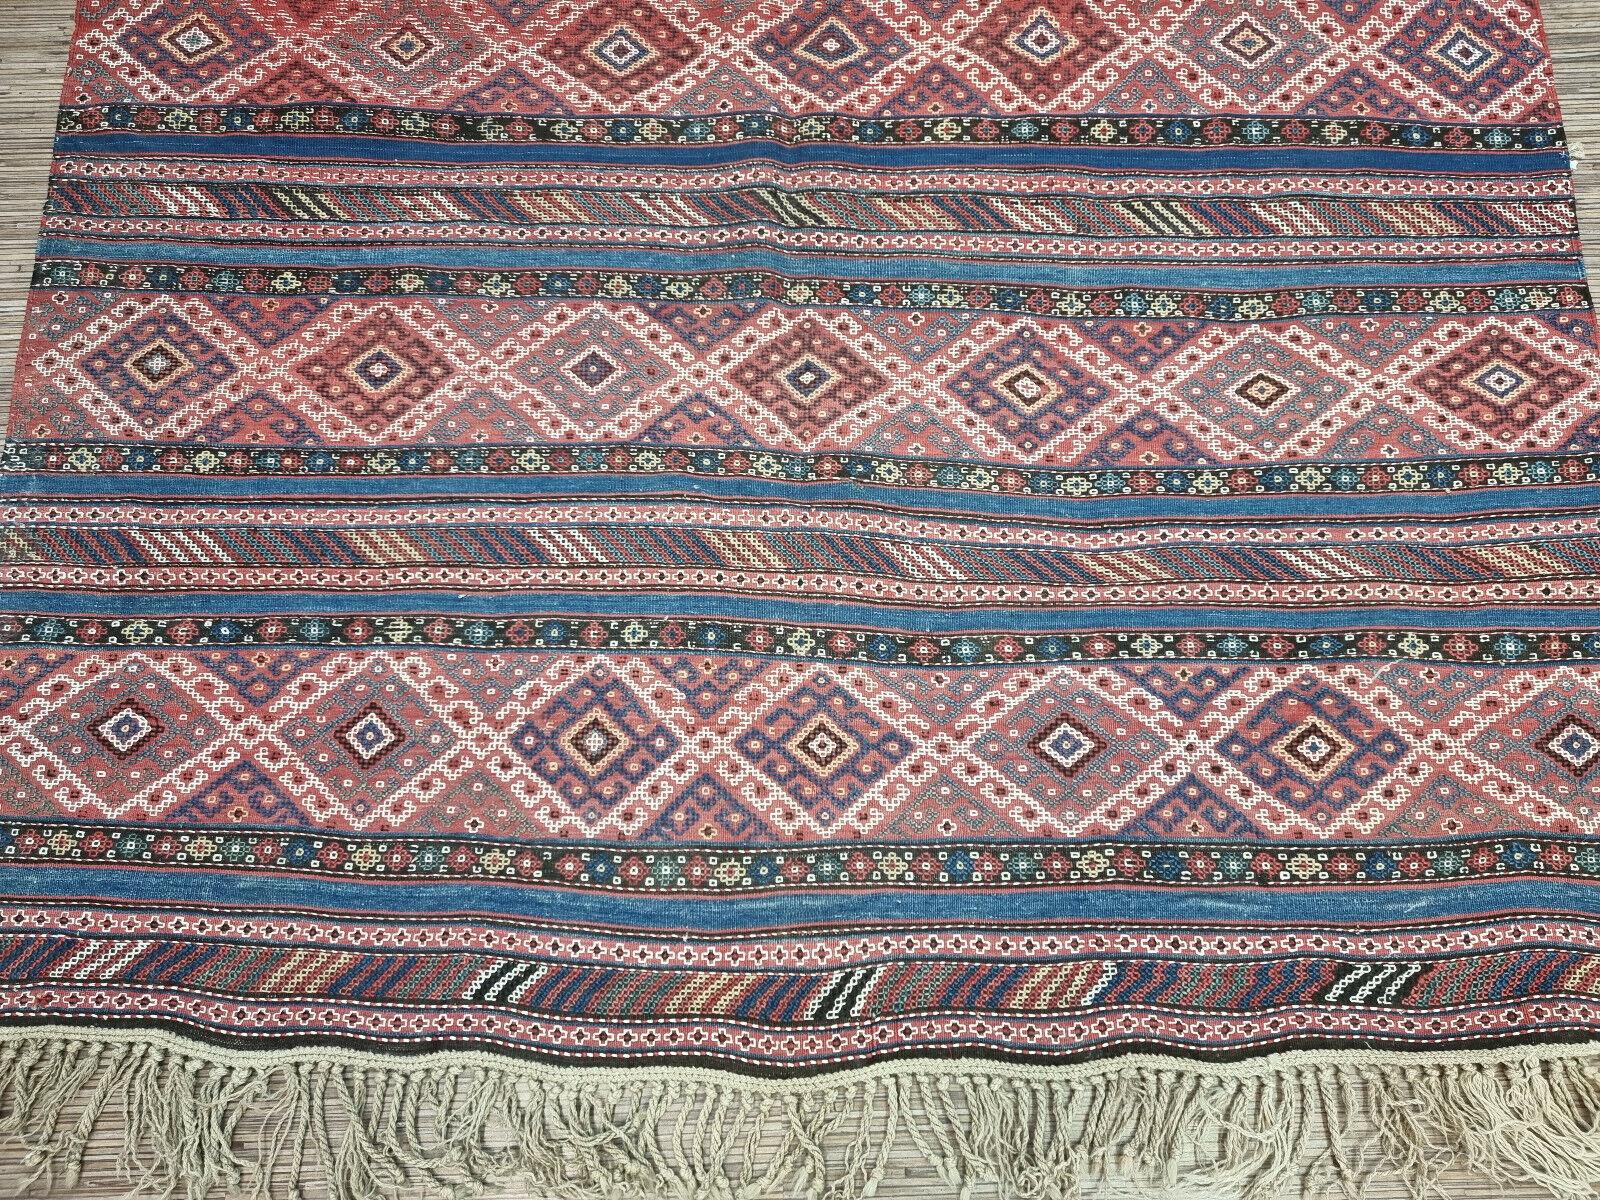 Handmade Antique Persian Style Sumak Kilim Rug 5.4' x 7', 1920s - 1D86 1